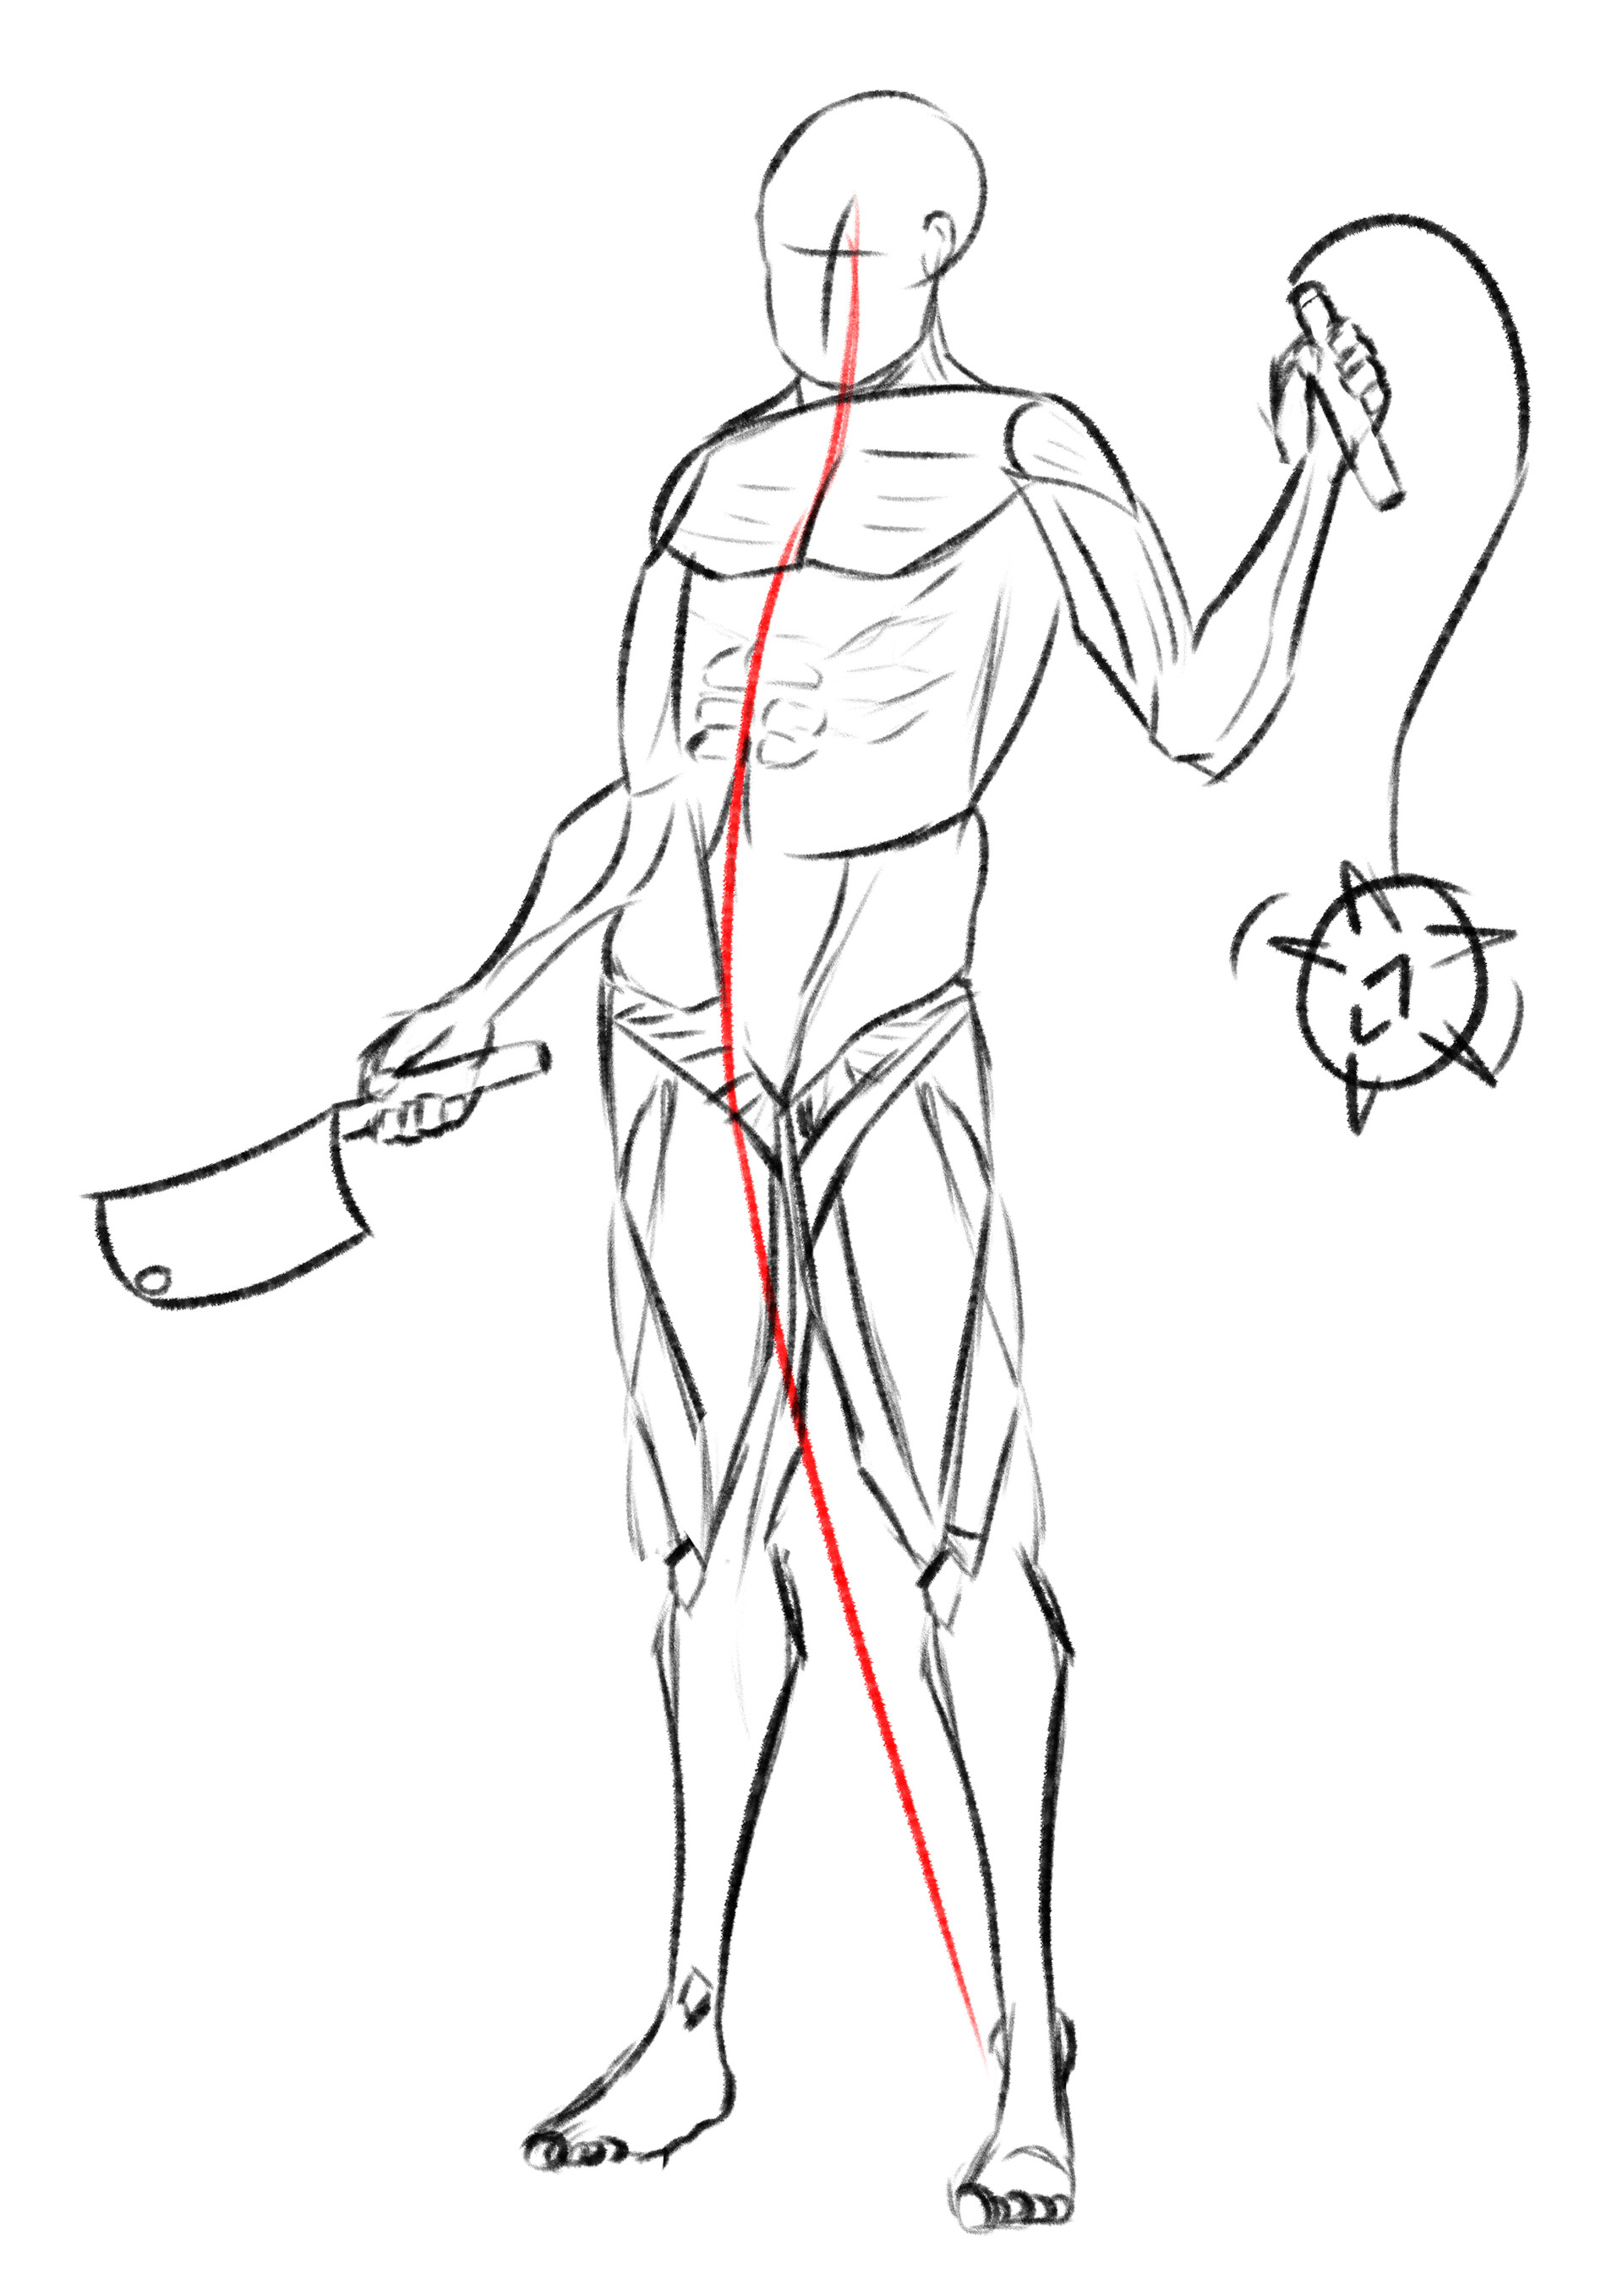 ArtStation - Anatomy and final pose of original character design (2021)